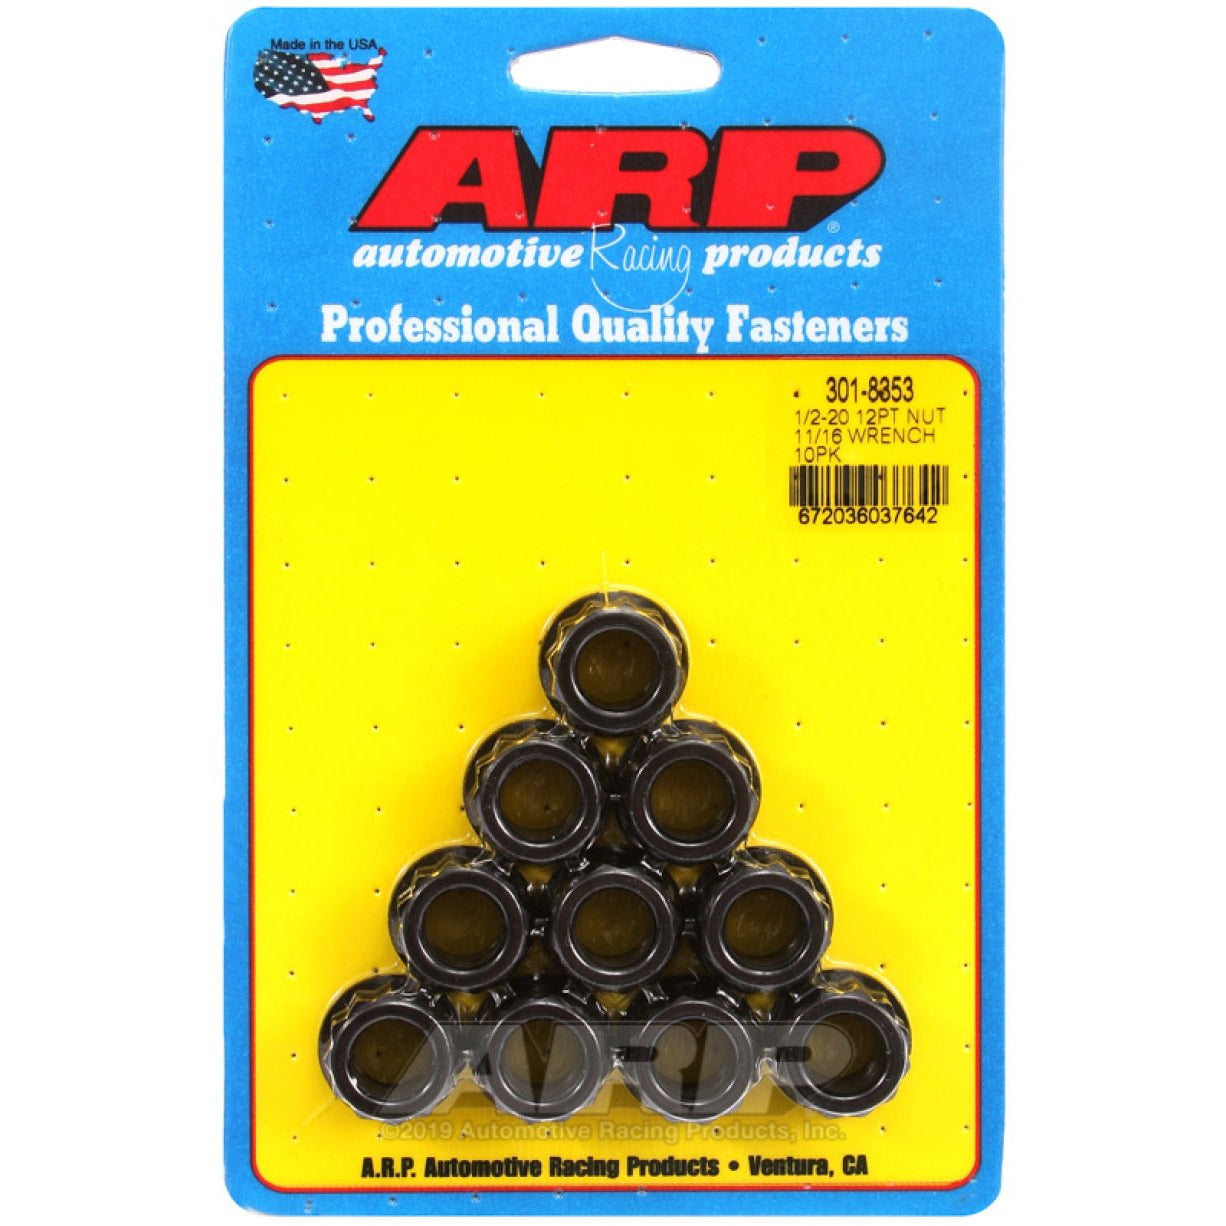 ARP 1/2-20 11/16 Socket 12pt Nut Kit (Set of 10) ARP Hardware Kits - Other